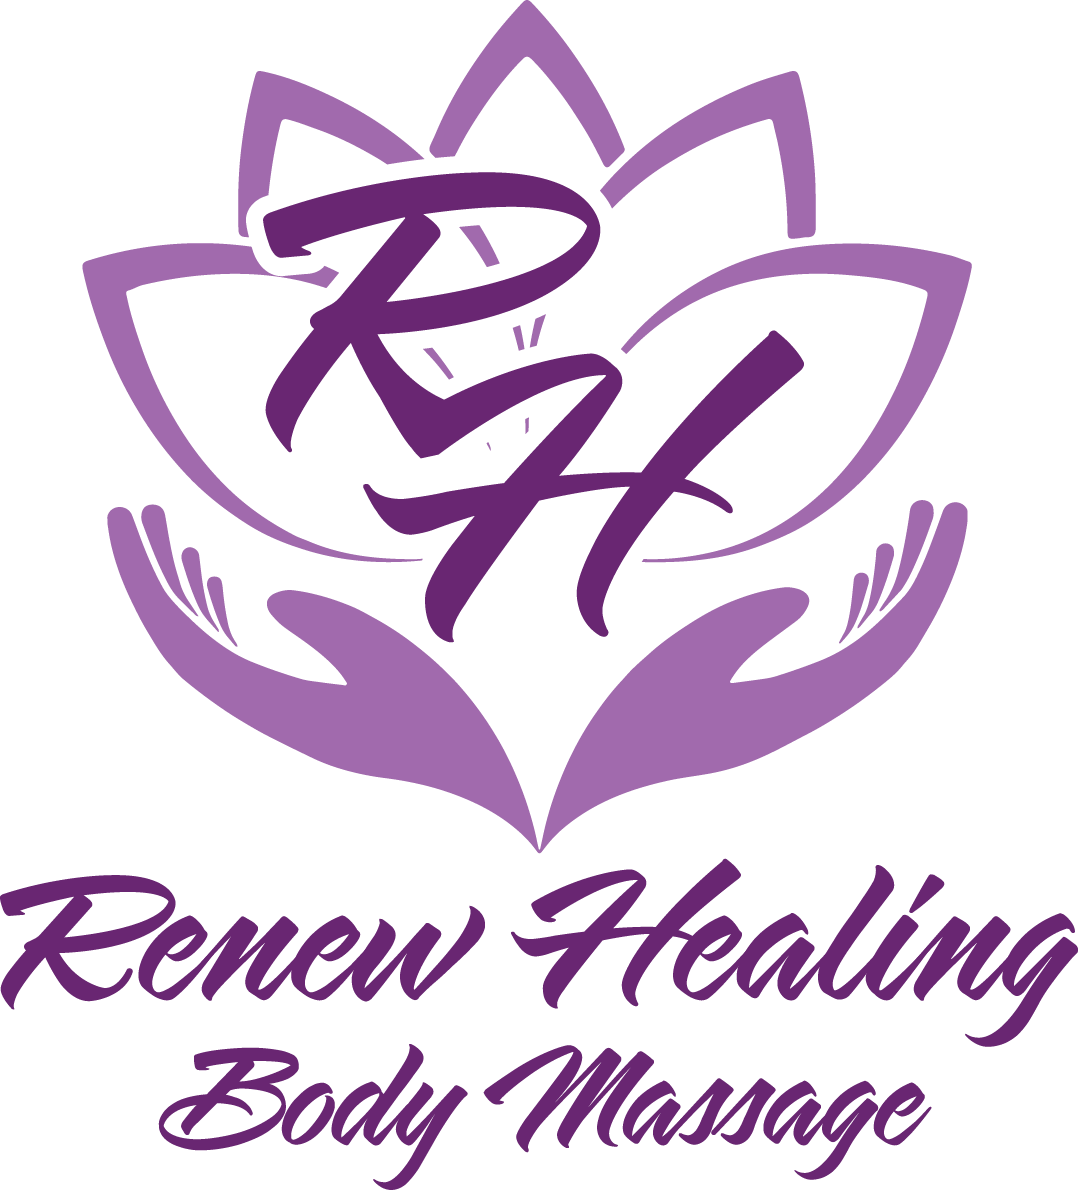 Renew Healing Body Massage